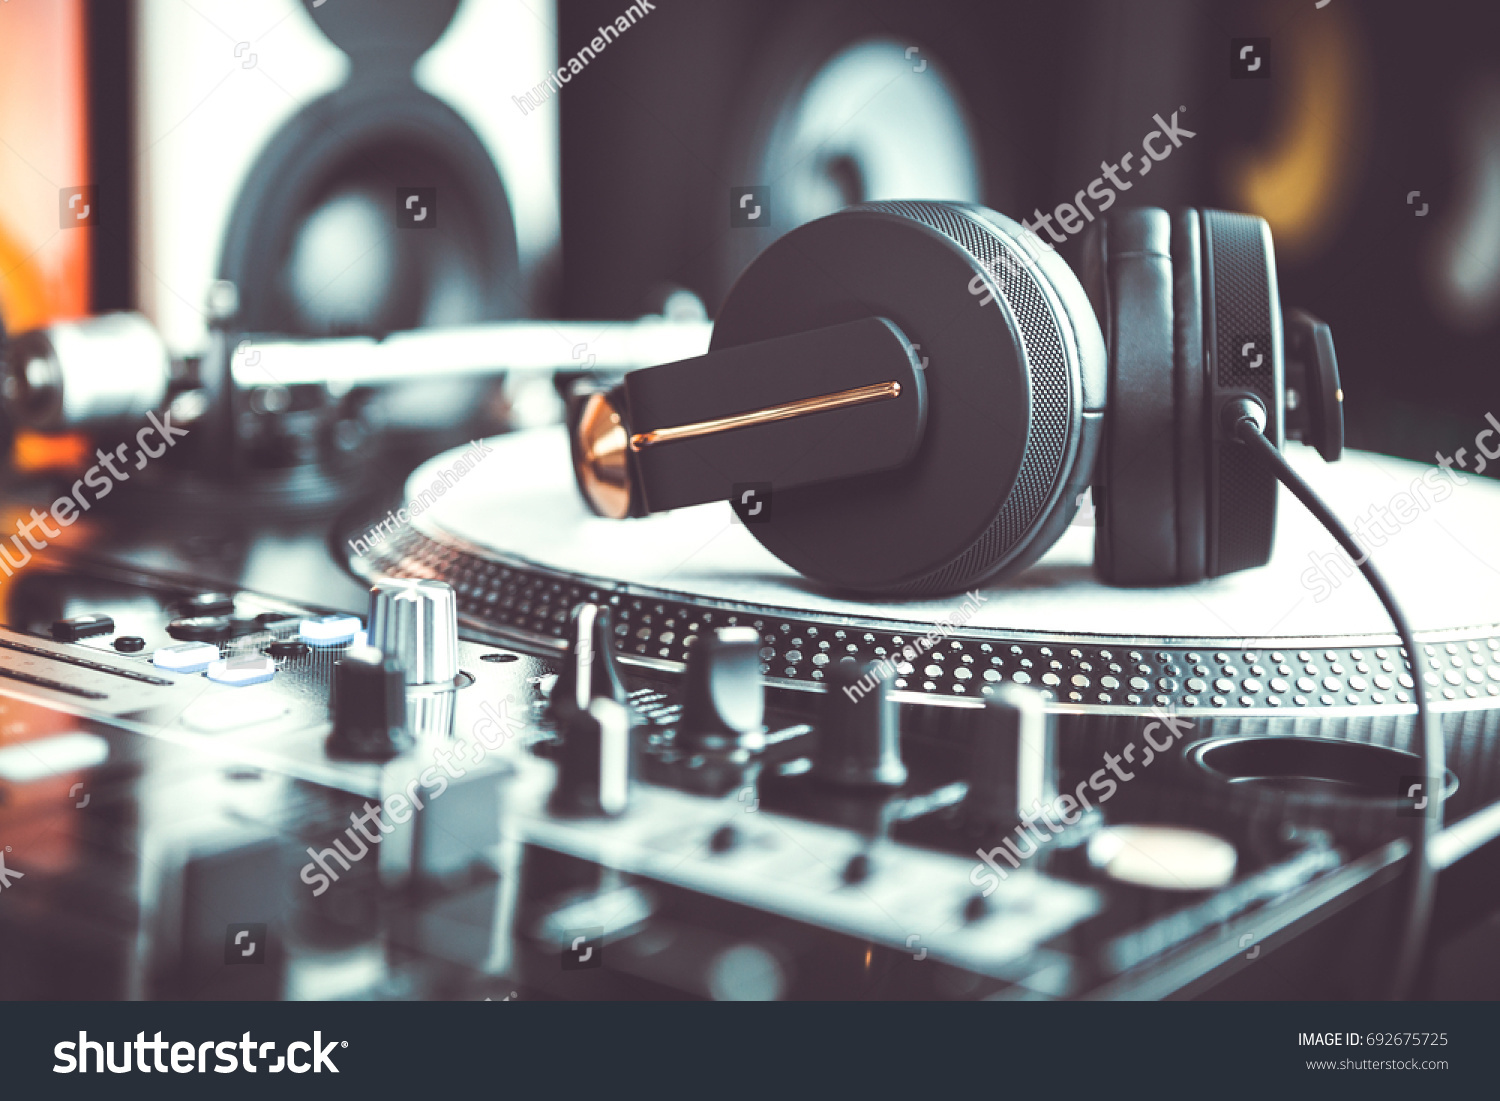 Dj headphones on turntable. Disc jockey audio equipment in close up #692675725